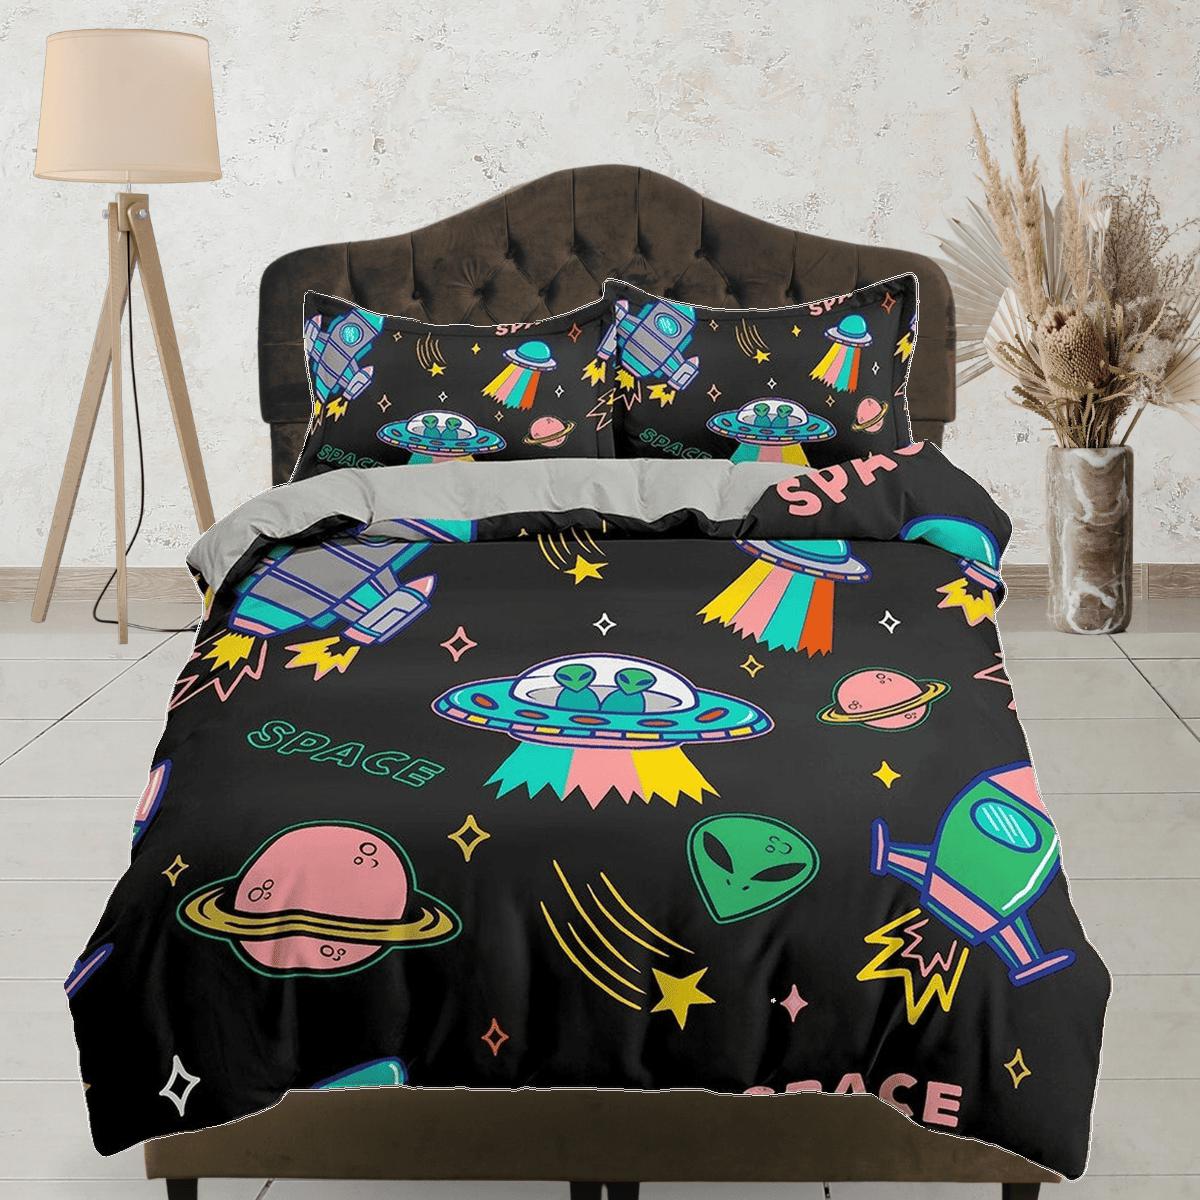 daintyduvet Colorful Spaceship Galaxy Bedding, Duvet Cover Set & Pillowcase, Zipper Bedding, Dorm Bedding, Teens Adult Duvet King Queen Full Twin Single